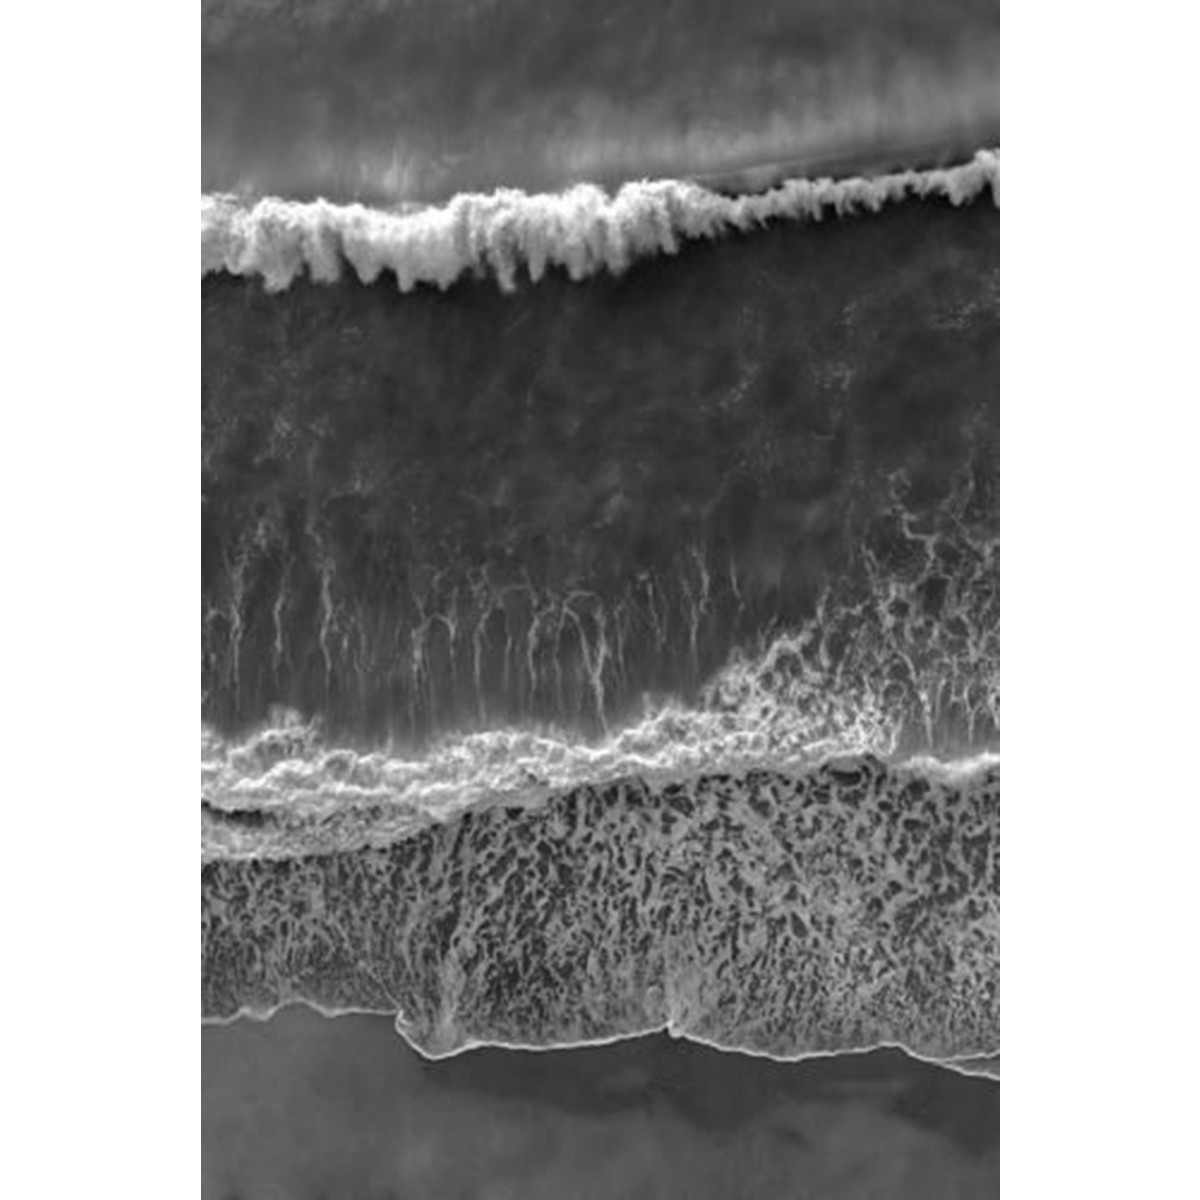 nahili ARTPRINT/POSTER "black and white beach "(DIN A1/A3 & 50x70cm) Aerial, schwarz weiße Fotografie Strand & Wellen Drohnenaufnahme 